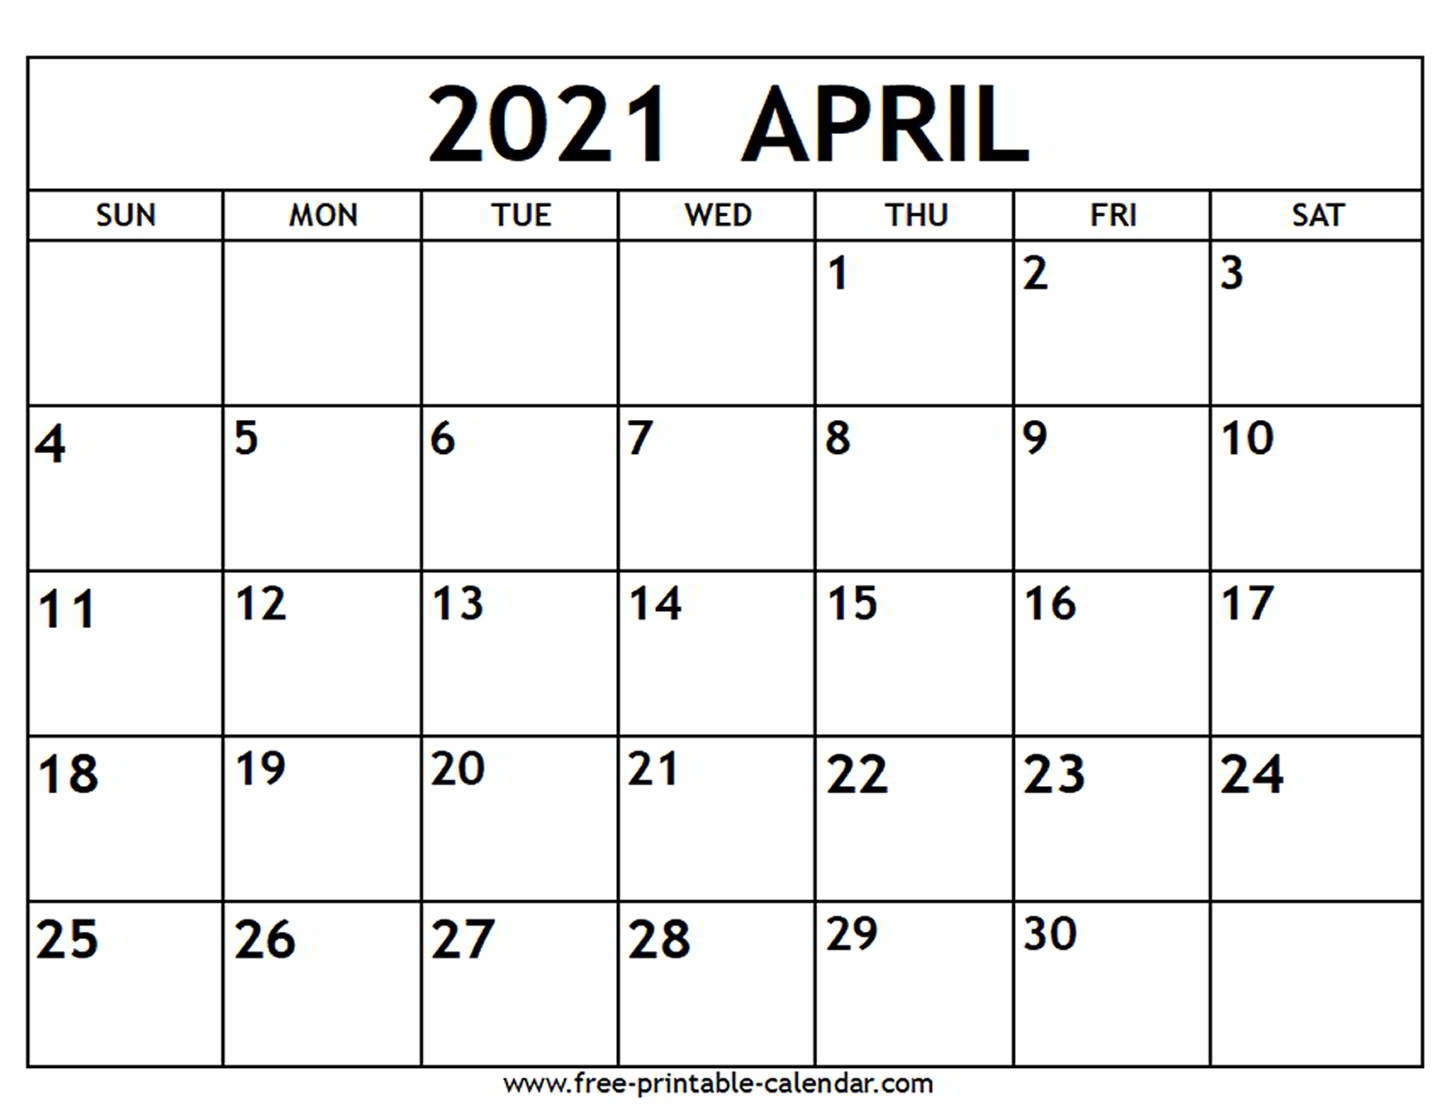 April 2021 Calendar - Free-Printable-Calendar